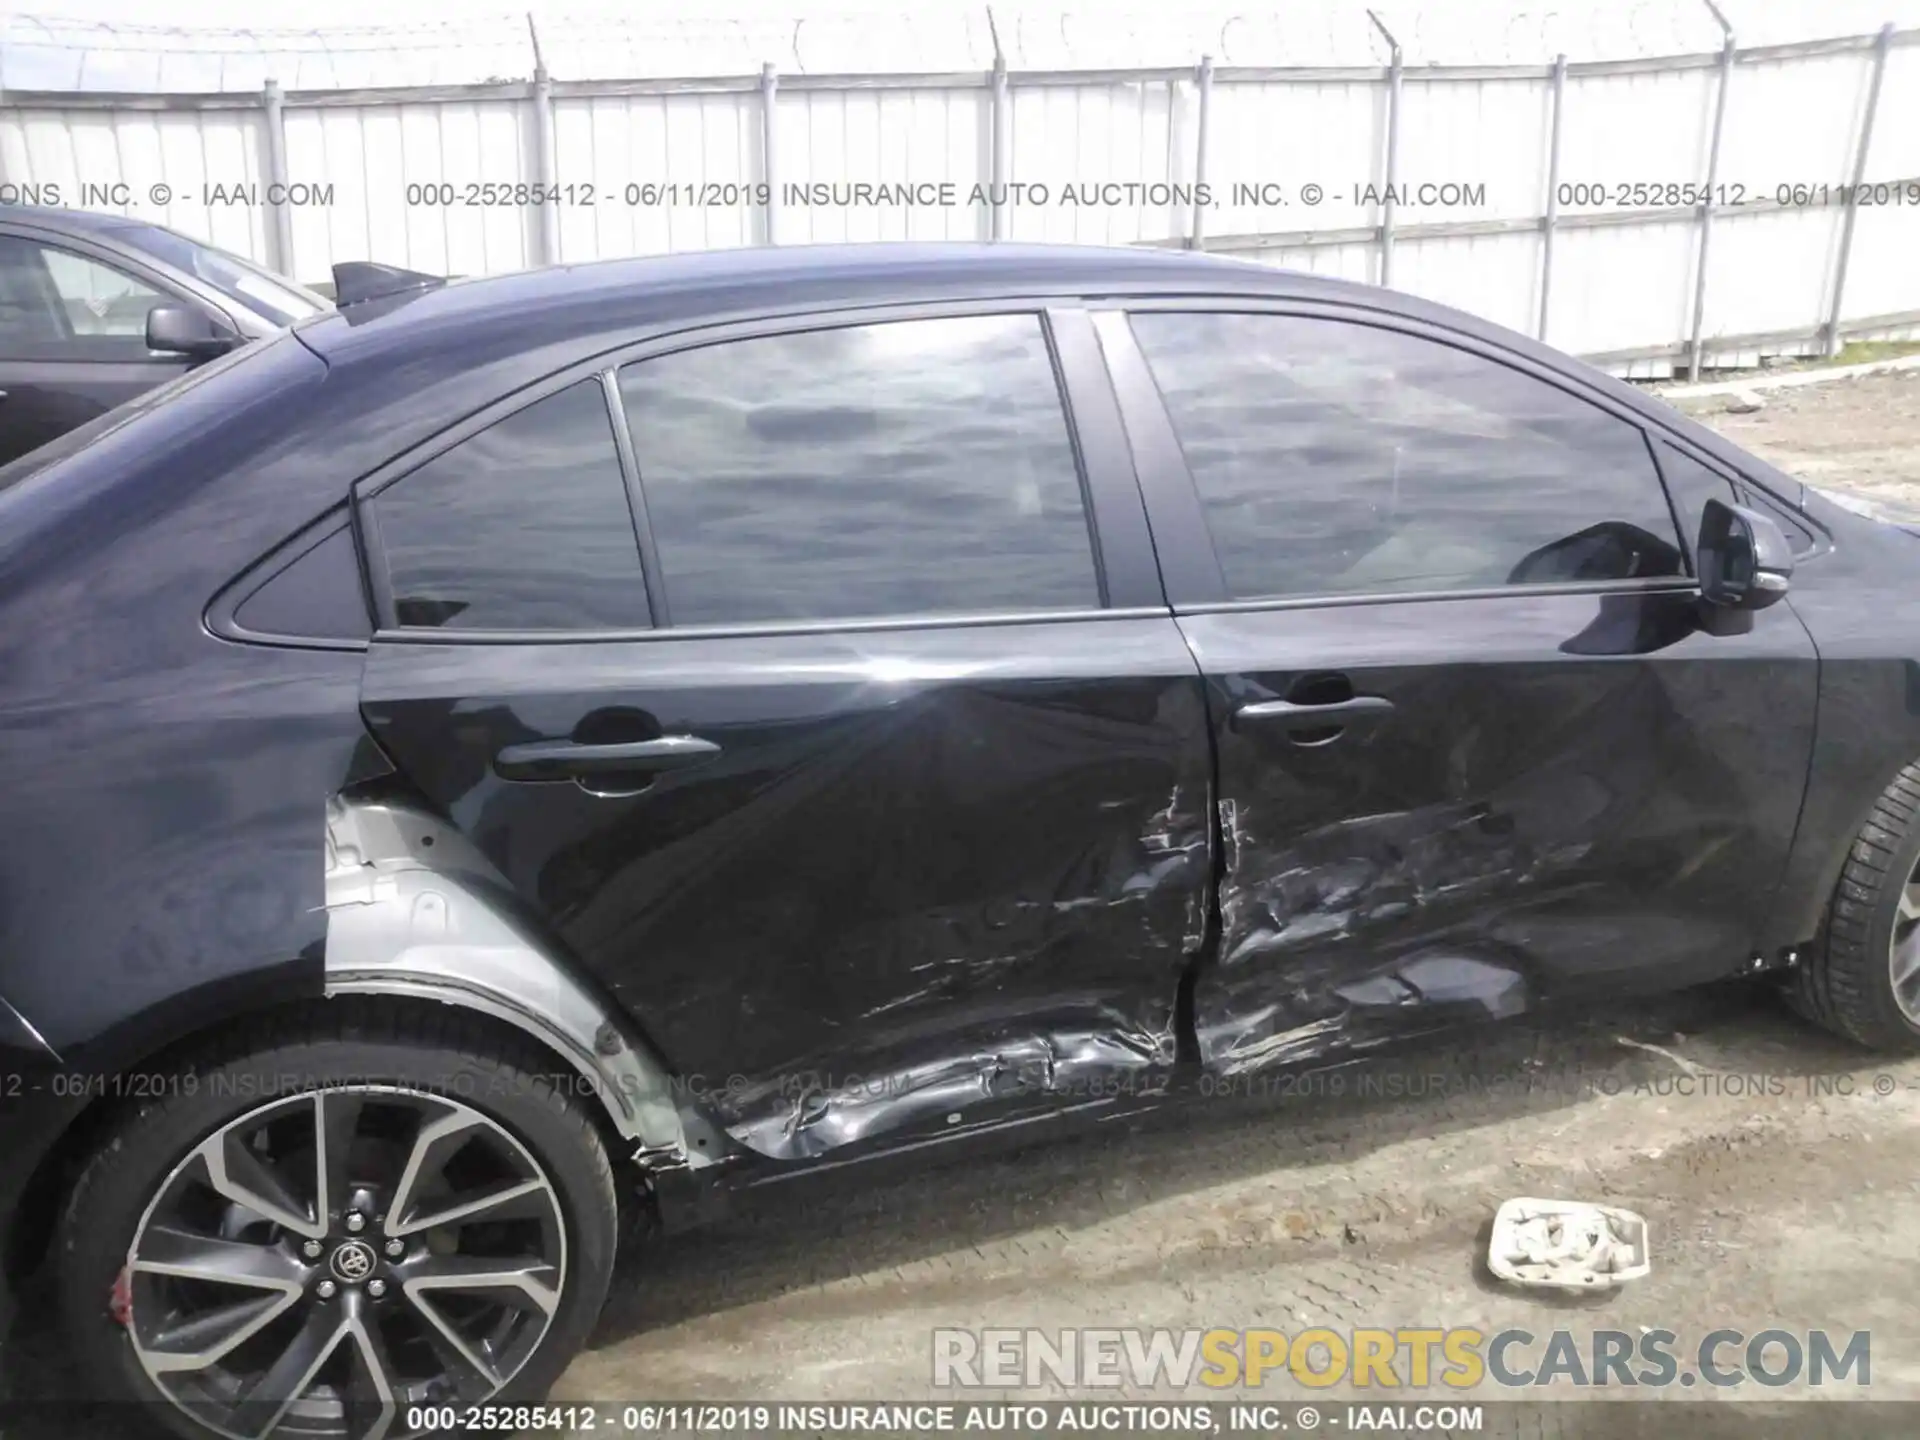 6 Photograph of a damaged car JTDS4RCE6LJ003539 TOYOTA COROLLA 2020